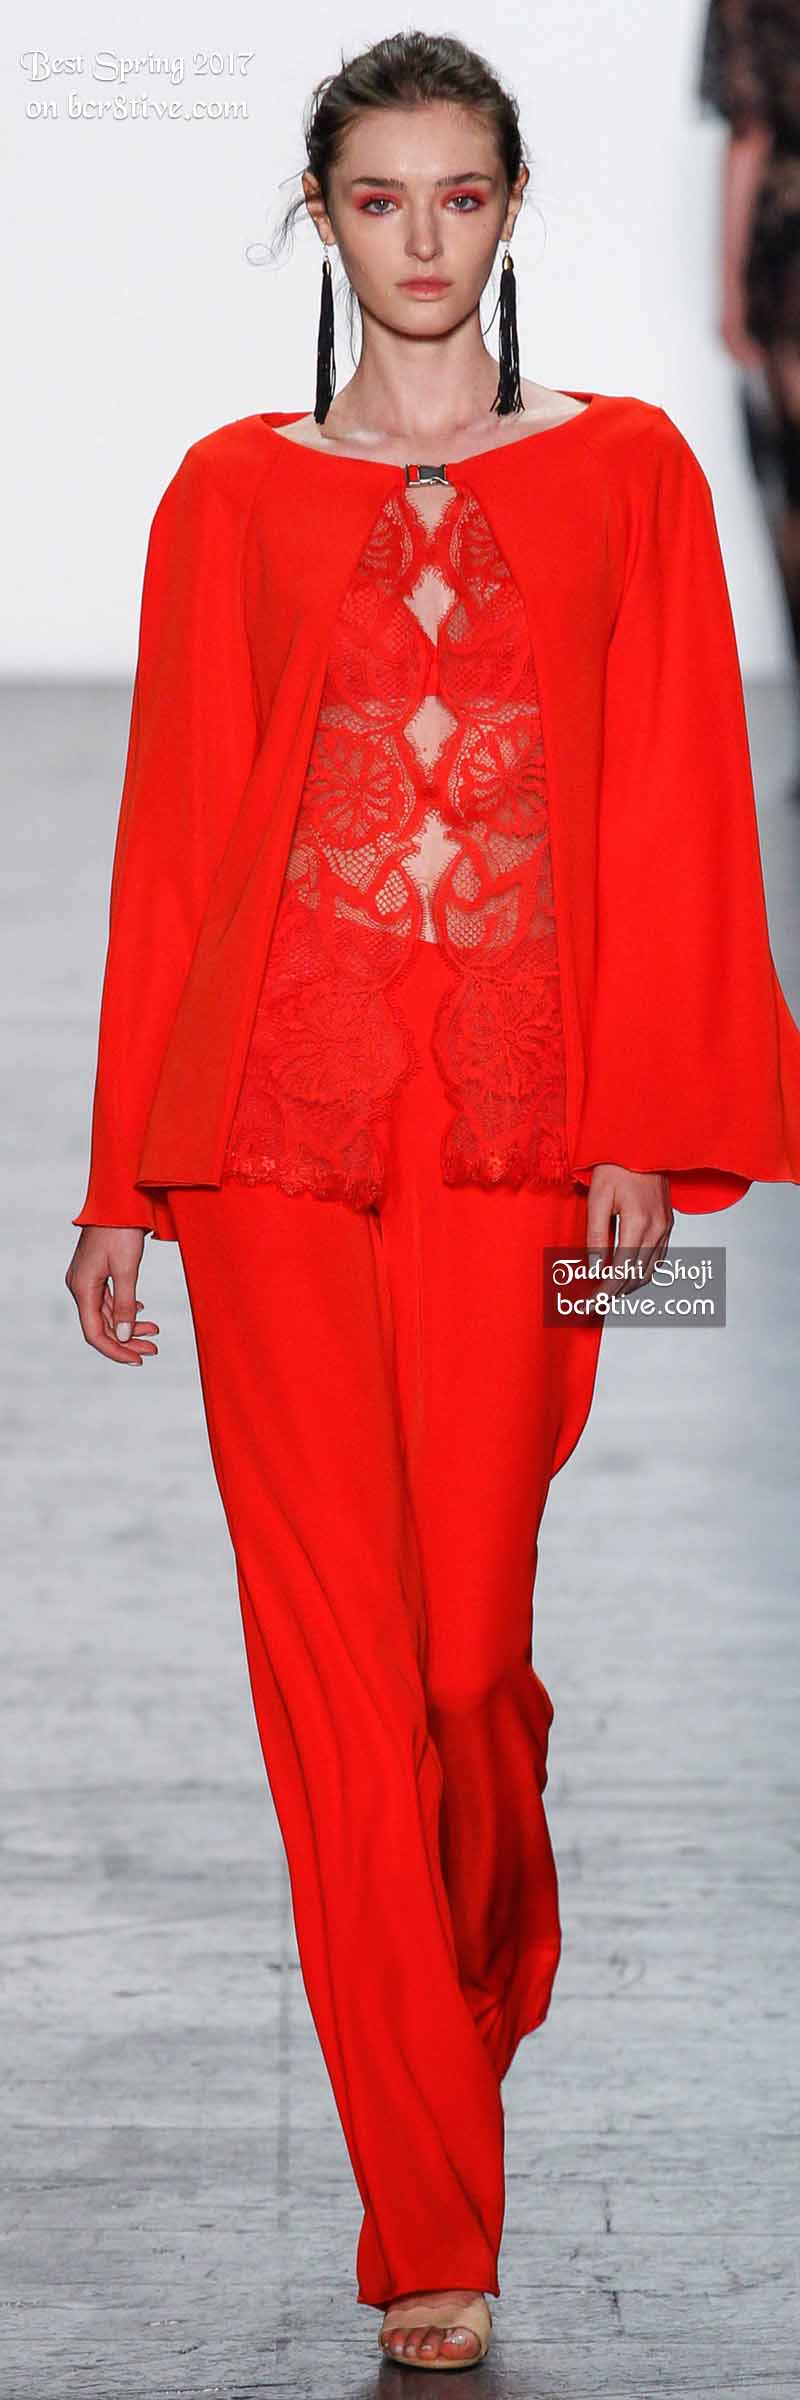 Tadashi Shoji - The Best Looks from New York Fashion Week Spring 2017